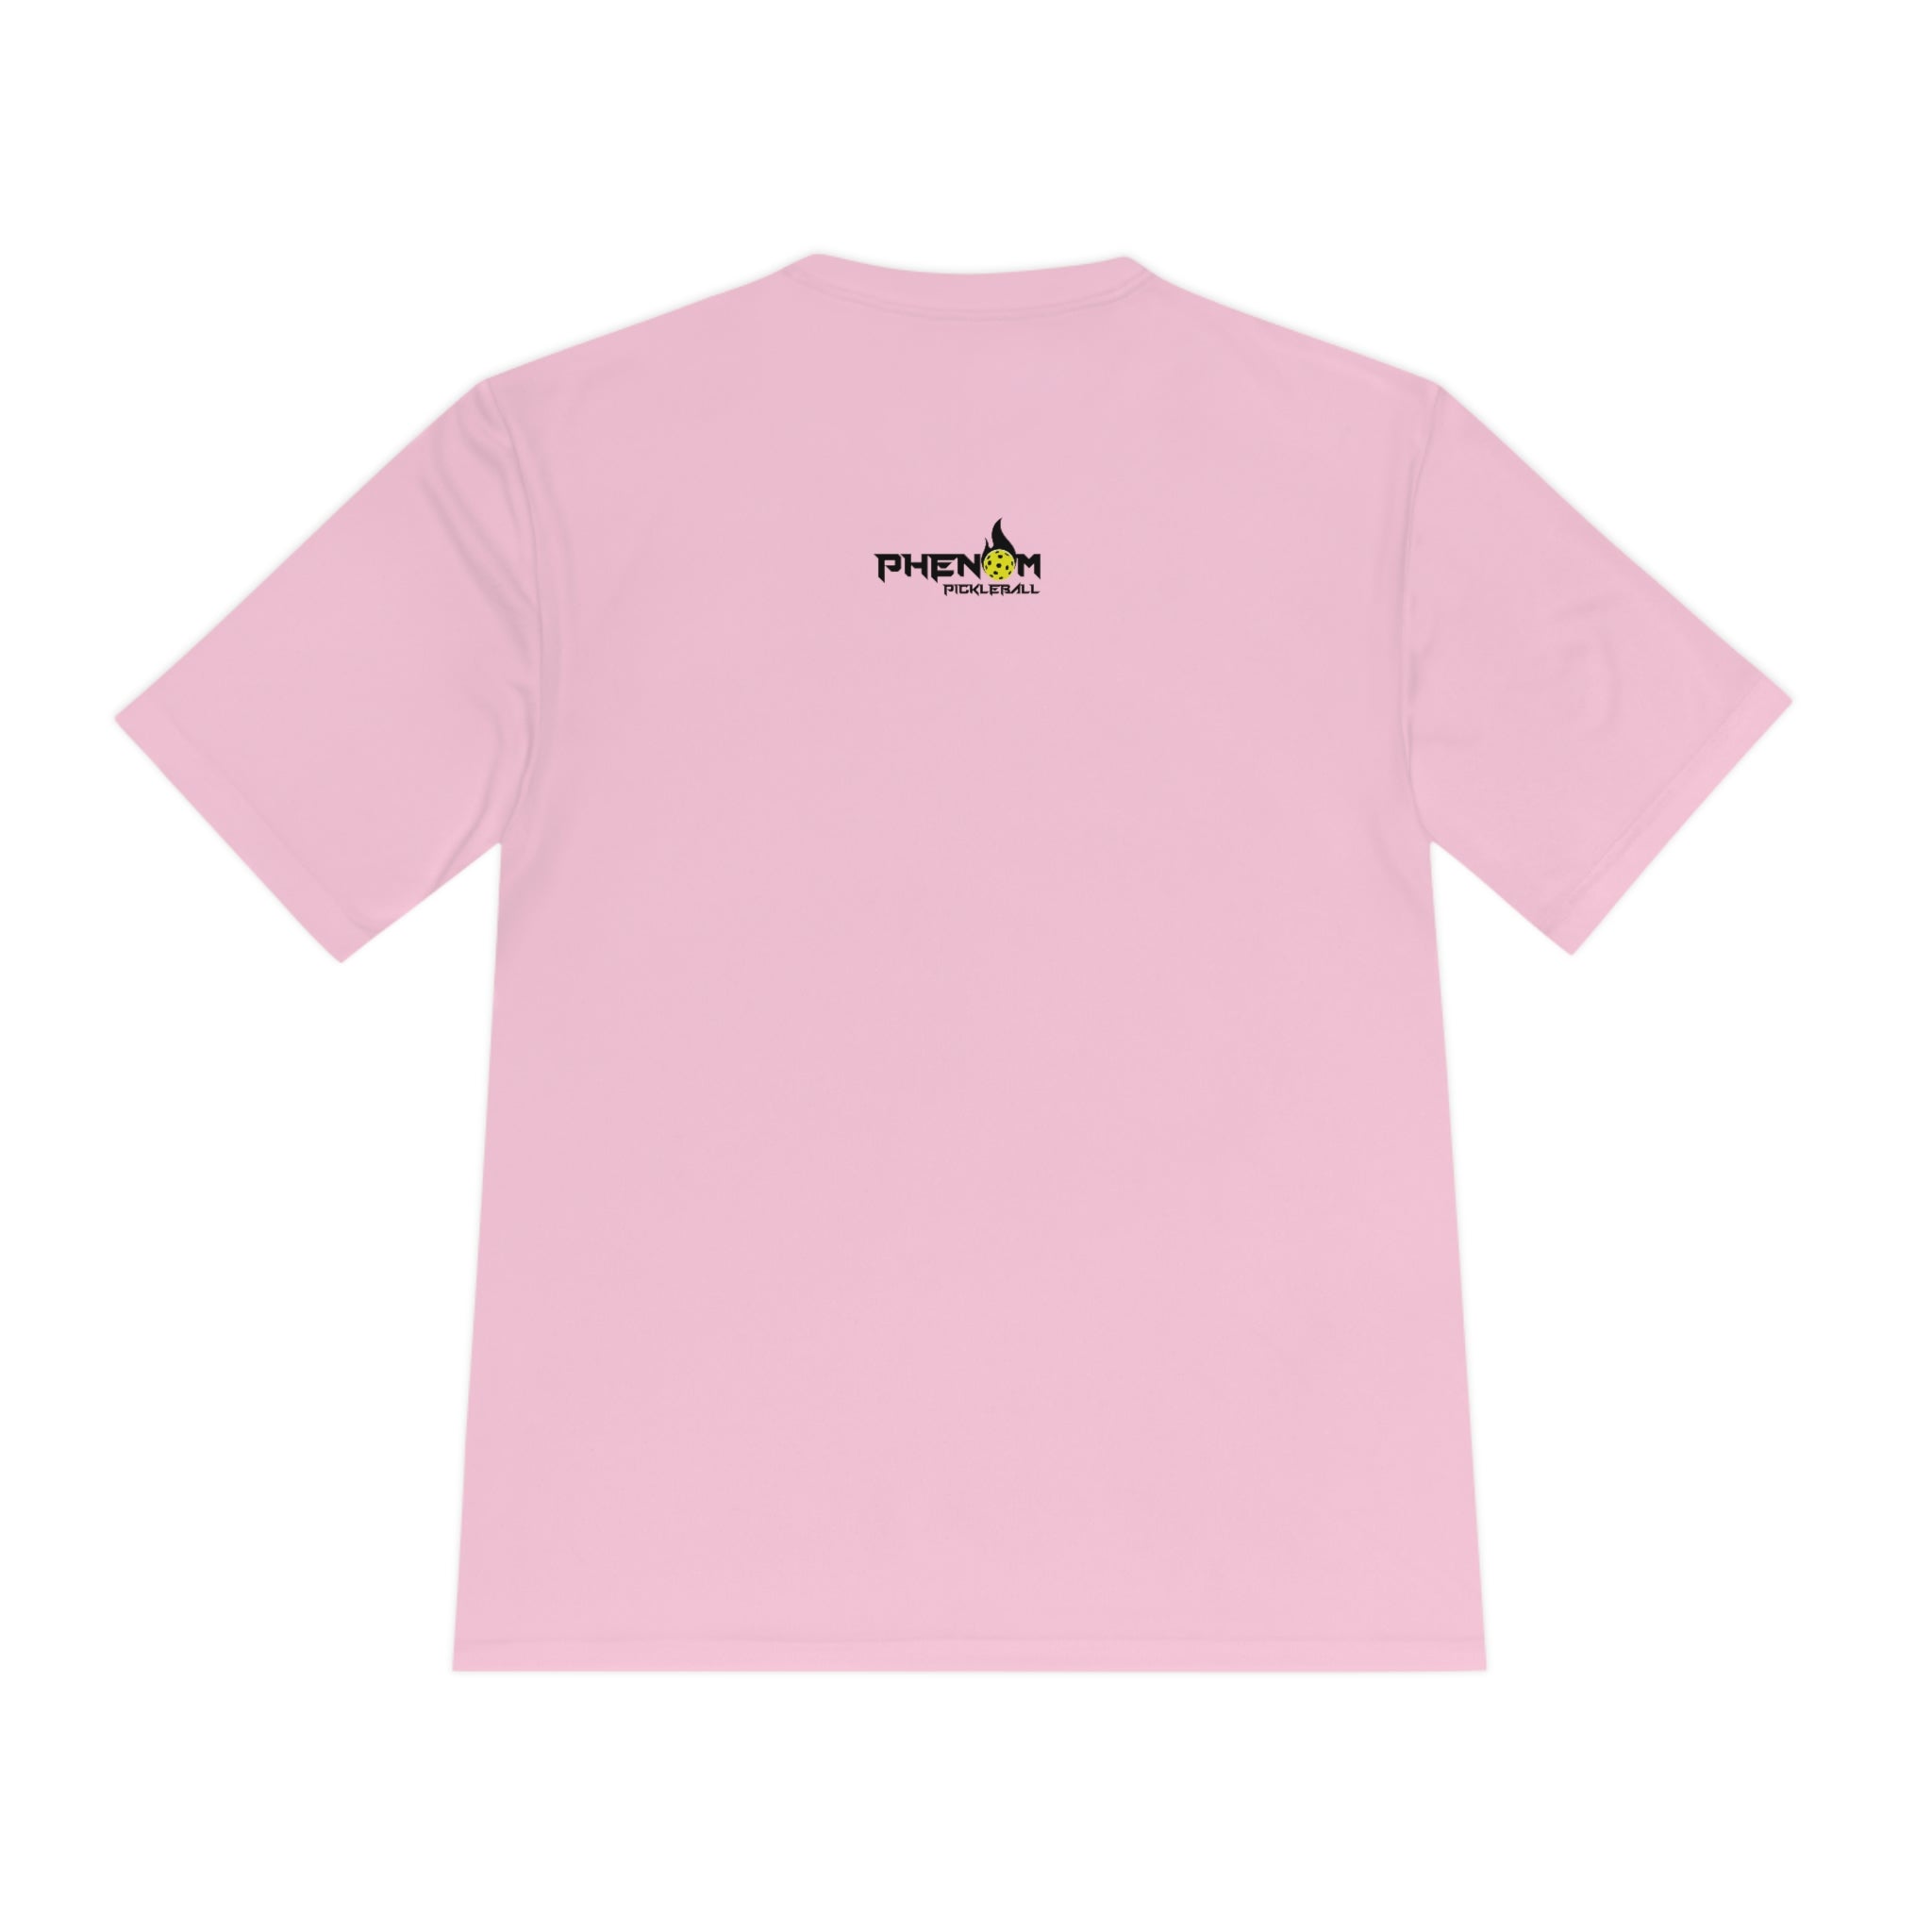 light pink heavy dinker men's athletic pickleball apparel shirt phenom logo back view